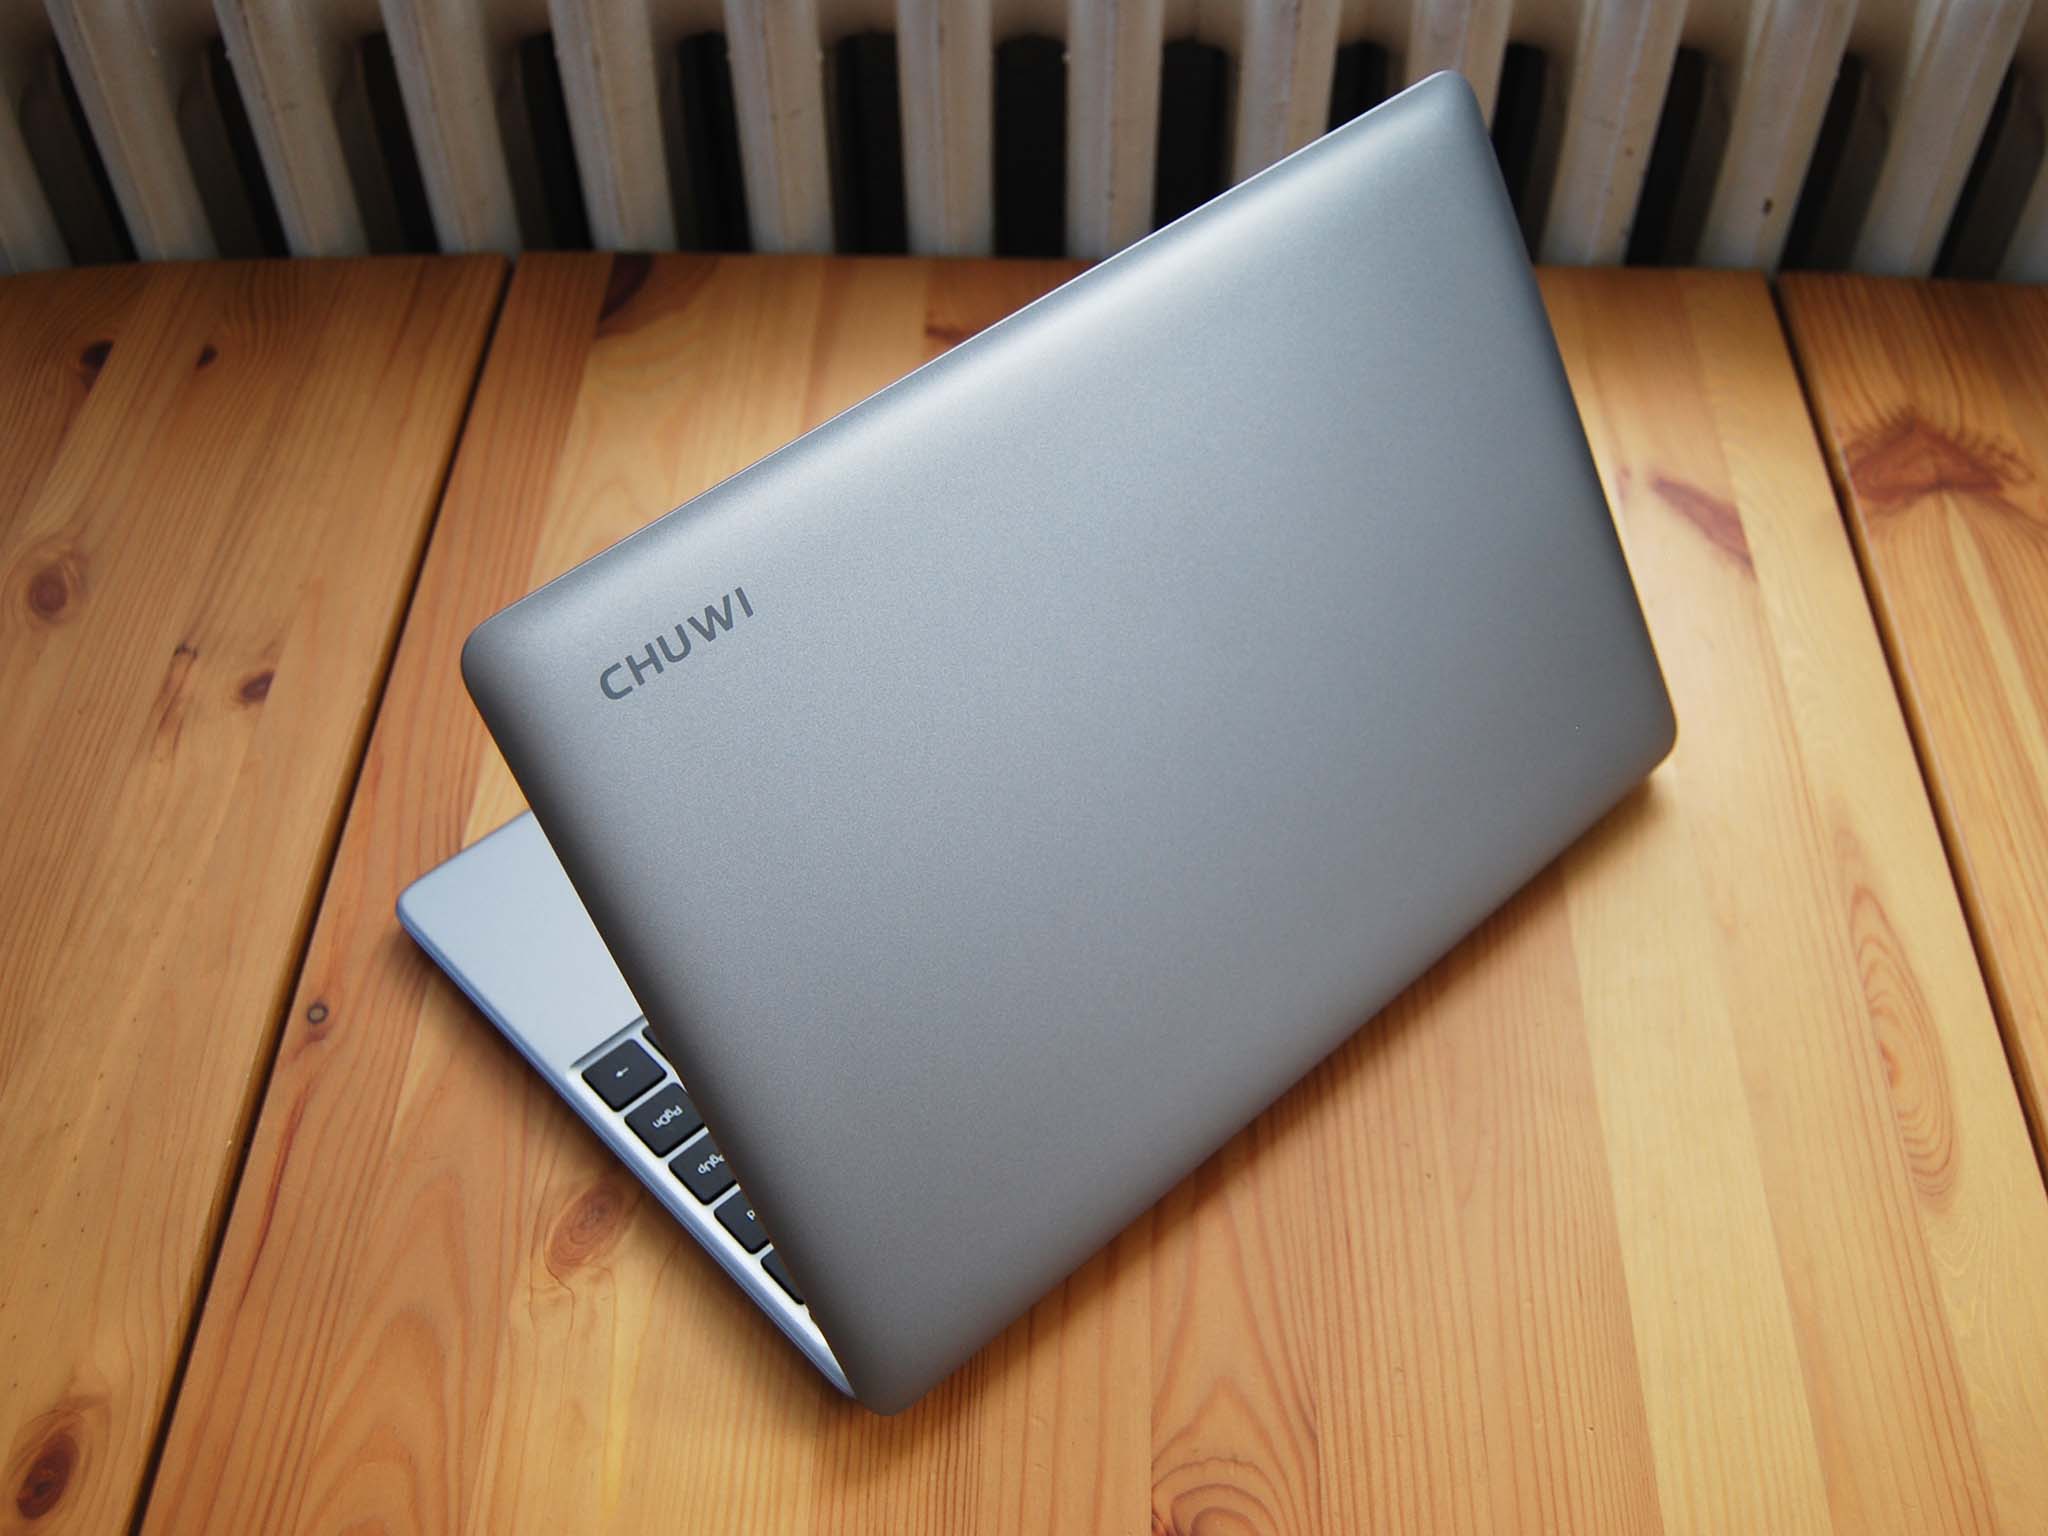 Thin and Lightweight CHUWI HeroBook Laptop Computer Windows 10 PC 1TB M.2 SSD Slot 4GB RAM//64GB eMMC and Extra 256GB SSD Intel Atom X5-E8000 Quad Core 14.1 1080P Display